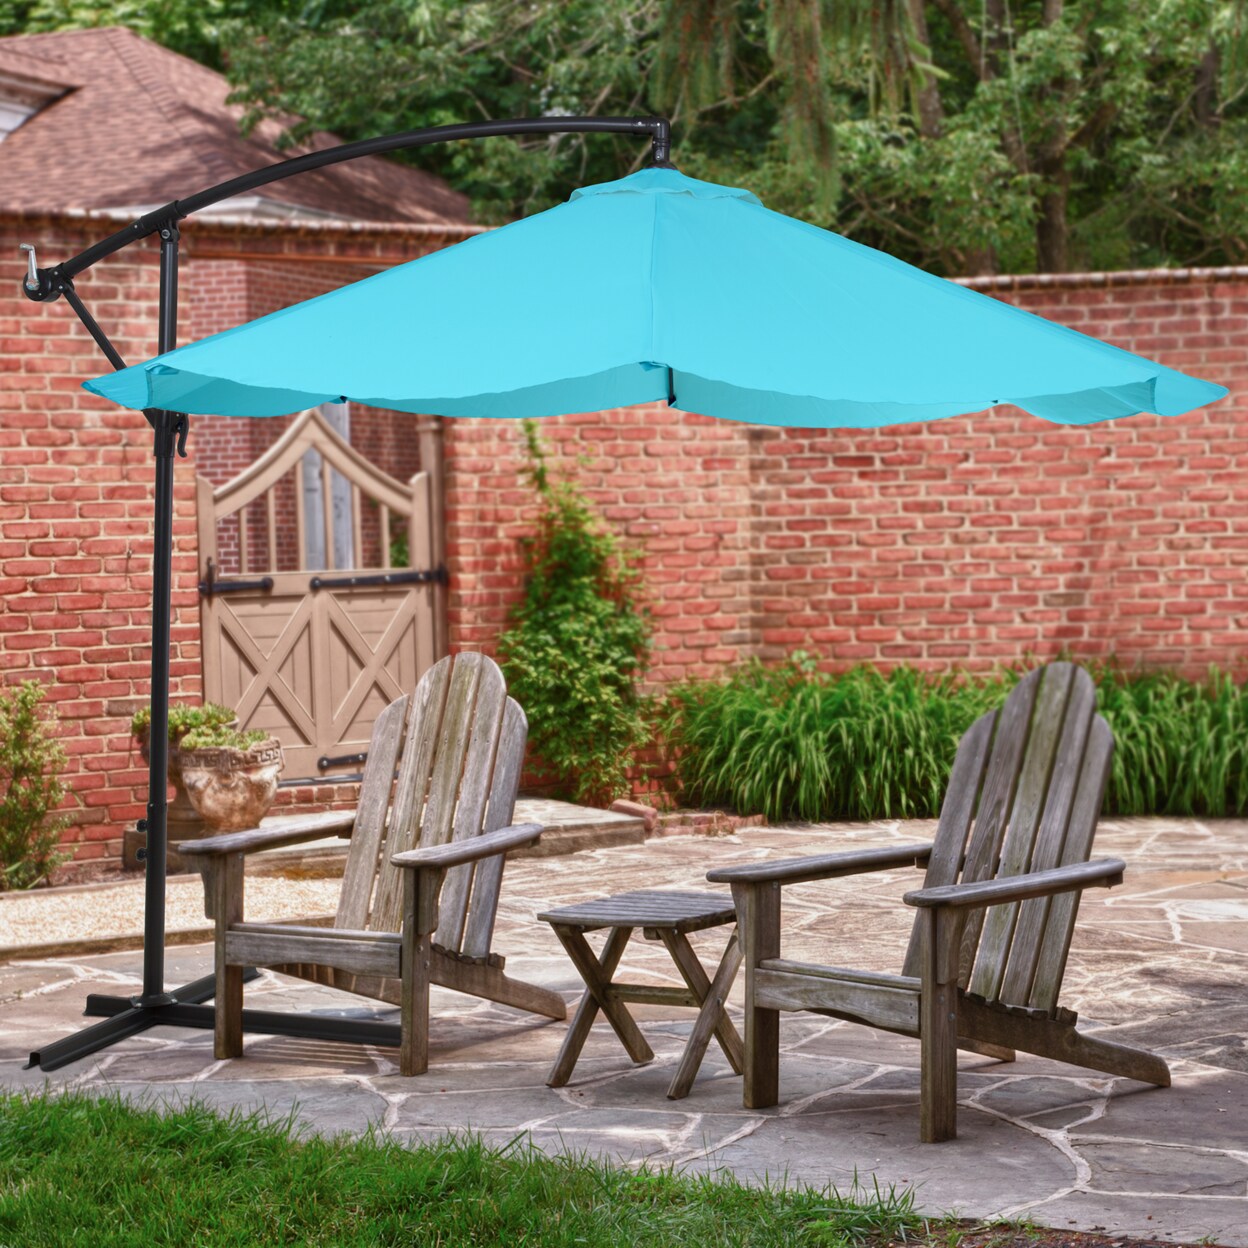 Pure Garden Offset 10 Foot Aluminum Hanging Patio Umbrella Sky Blue with Cross Base Bars